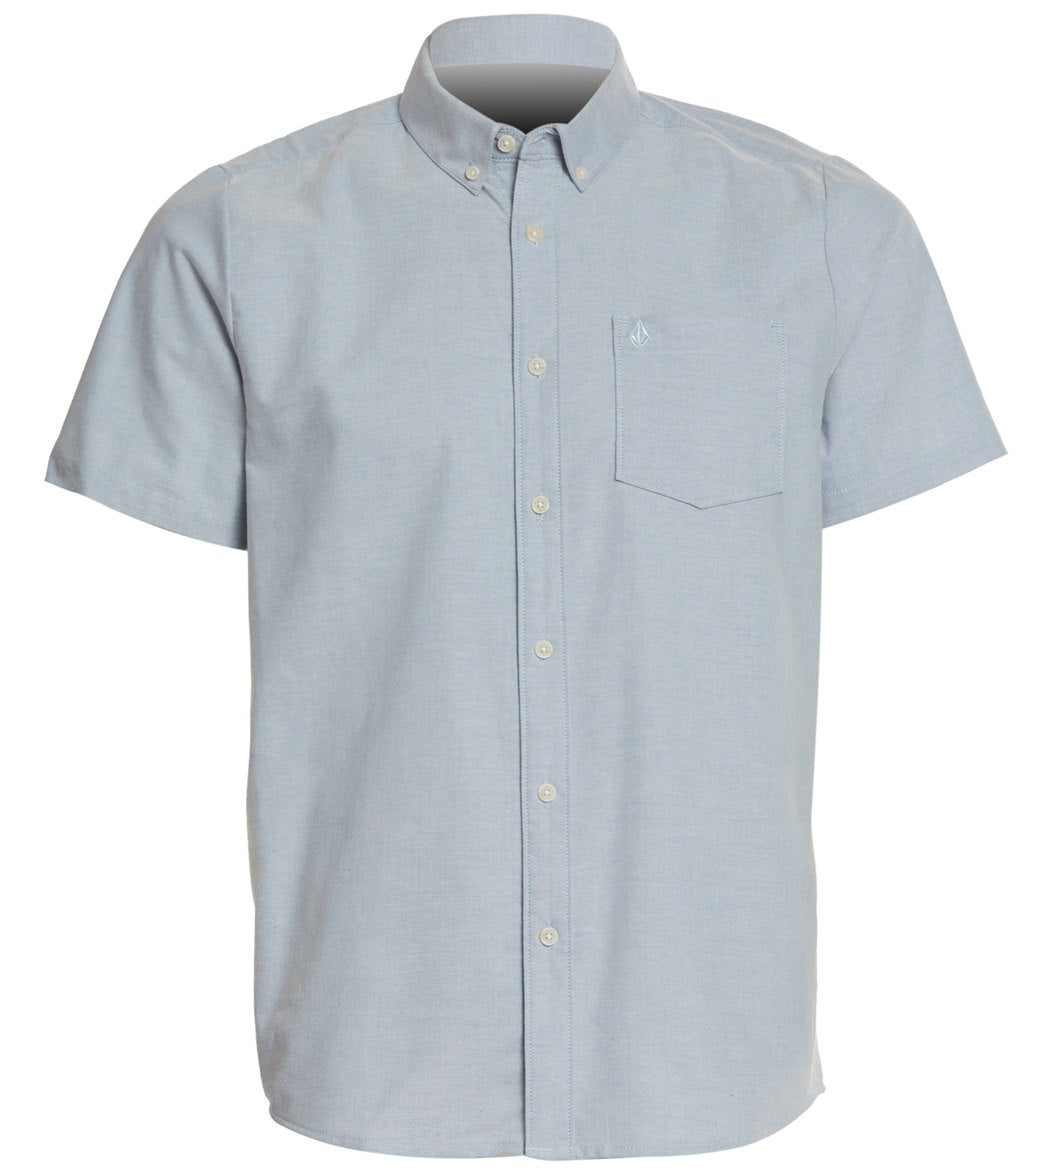 Volcom Men's Everett Oxford Short Sleeve Shirt - Wrecked Indigo Small Cotton/Elastane/Polyester - Swimoutlet.com